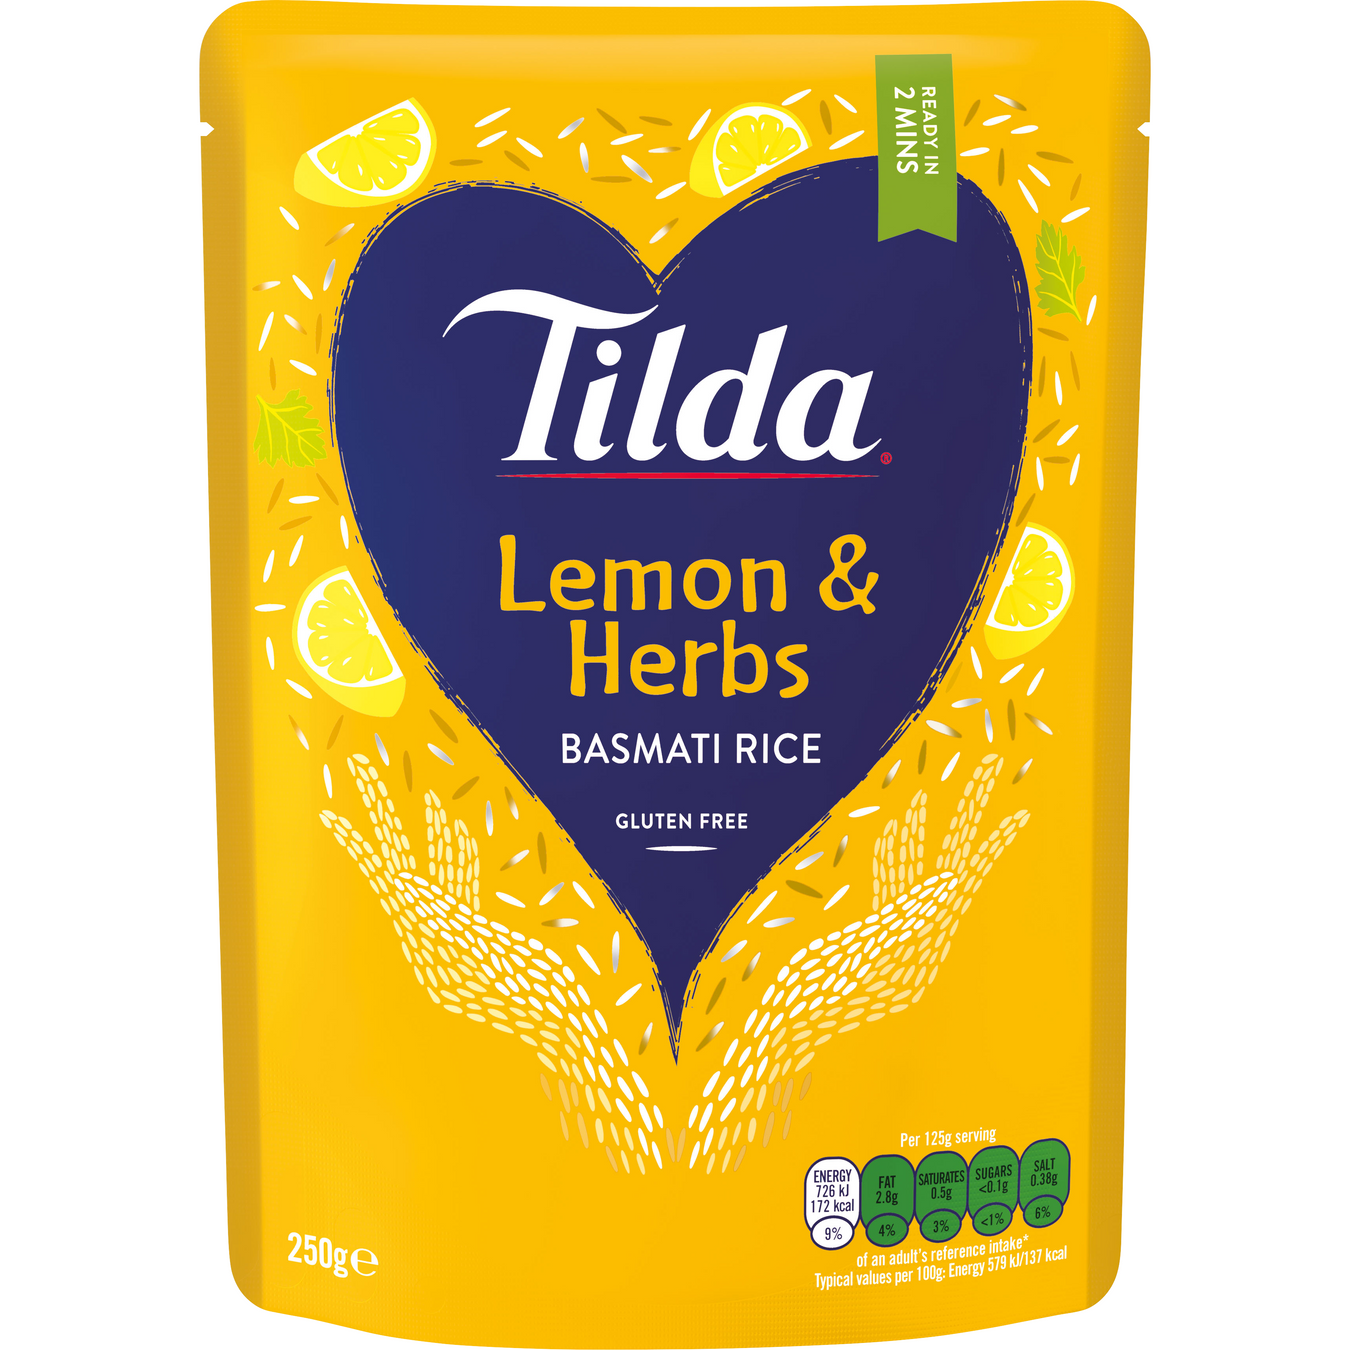 Tilda 微波米饭 - 购买 5 包仅需 4.59 英镑